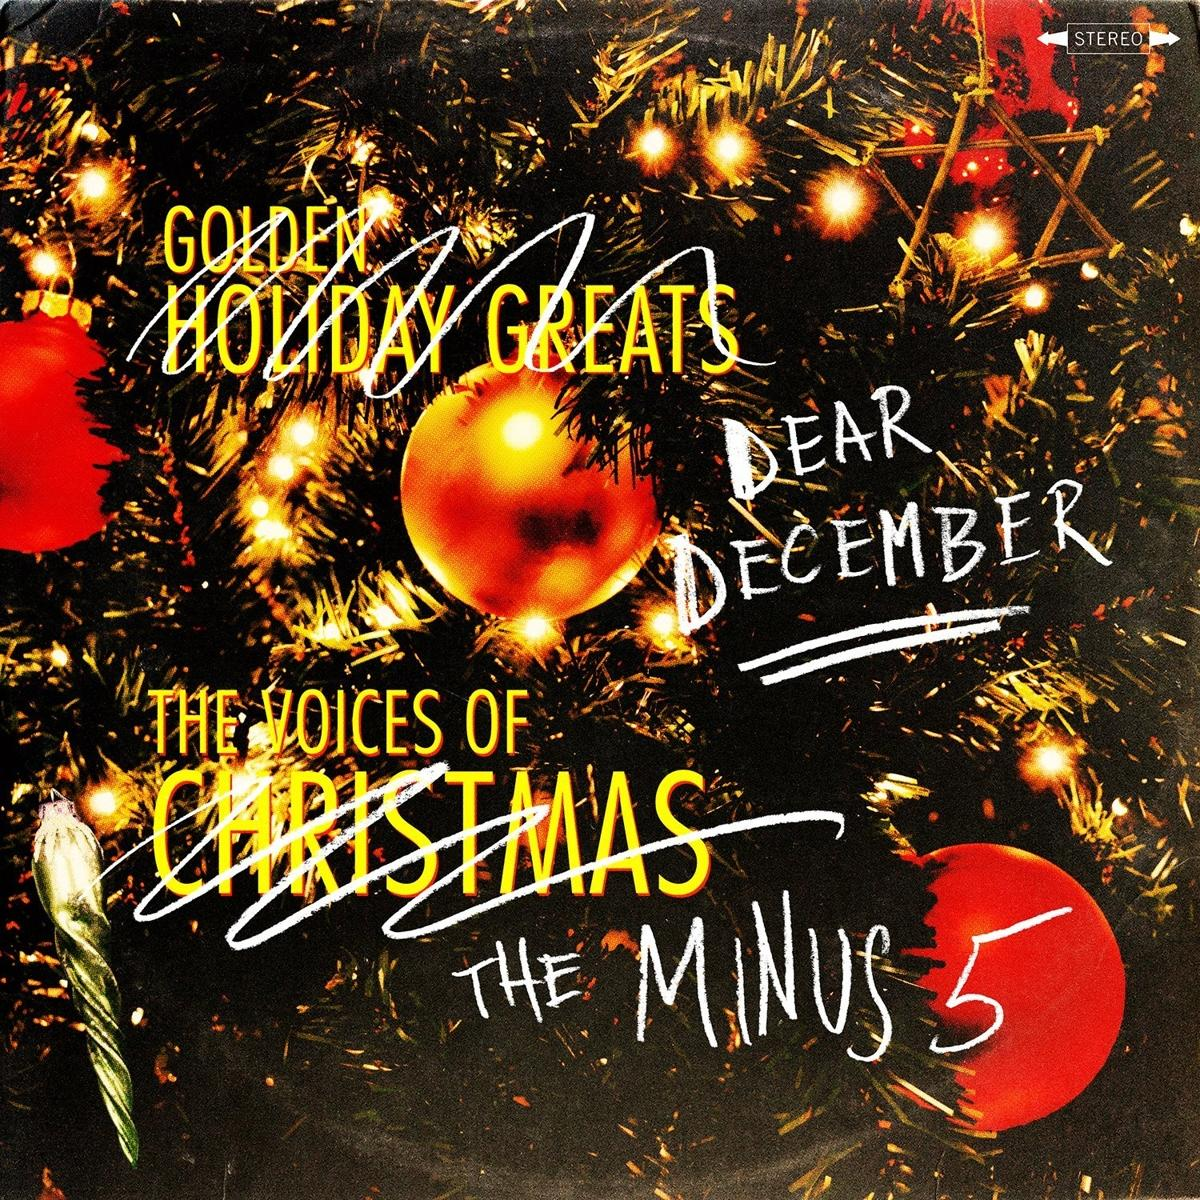 - Minus The (CD) 5 Dear - December